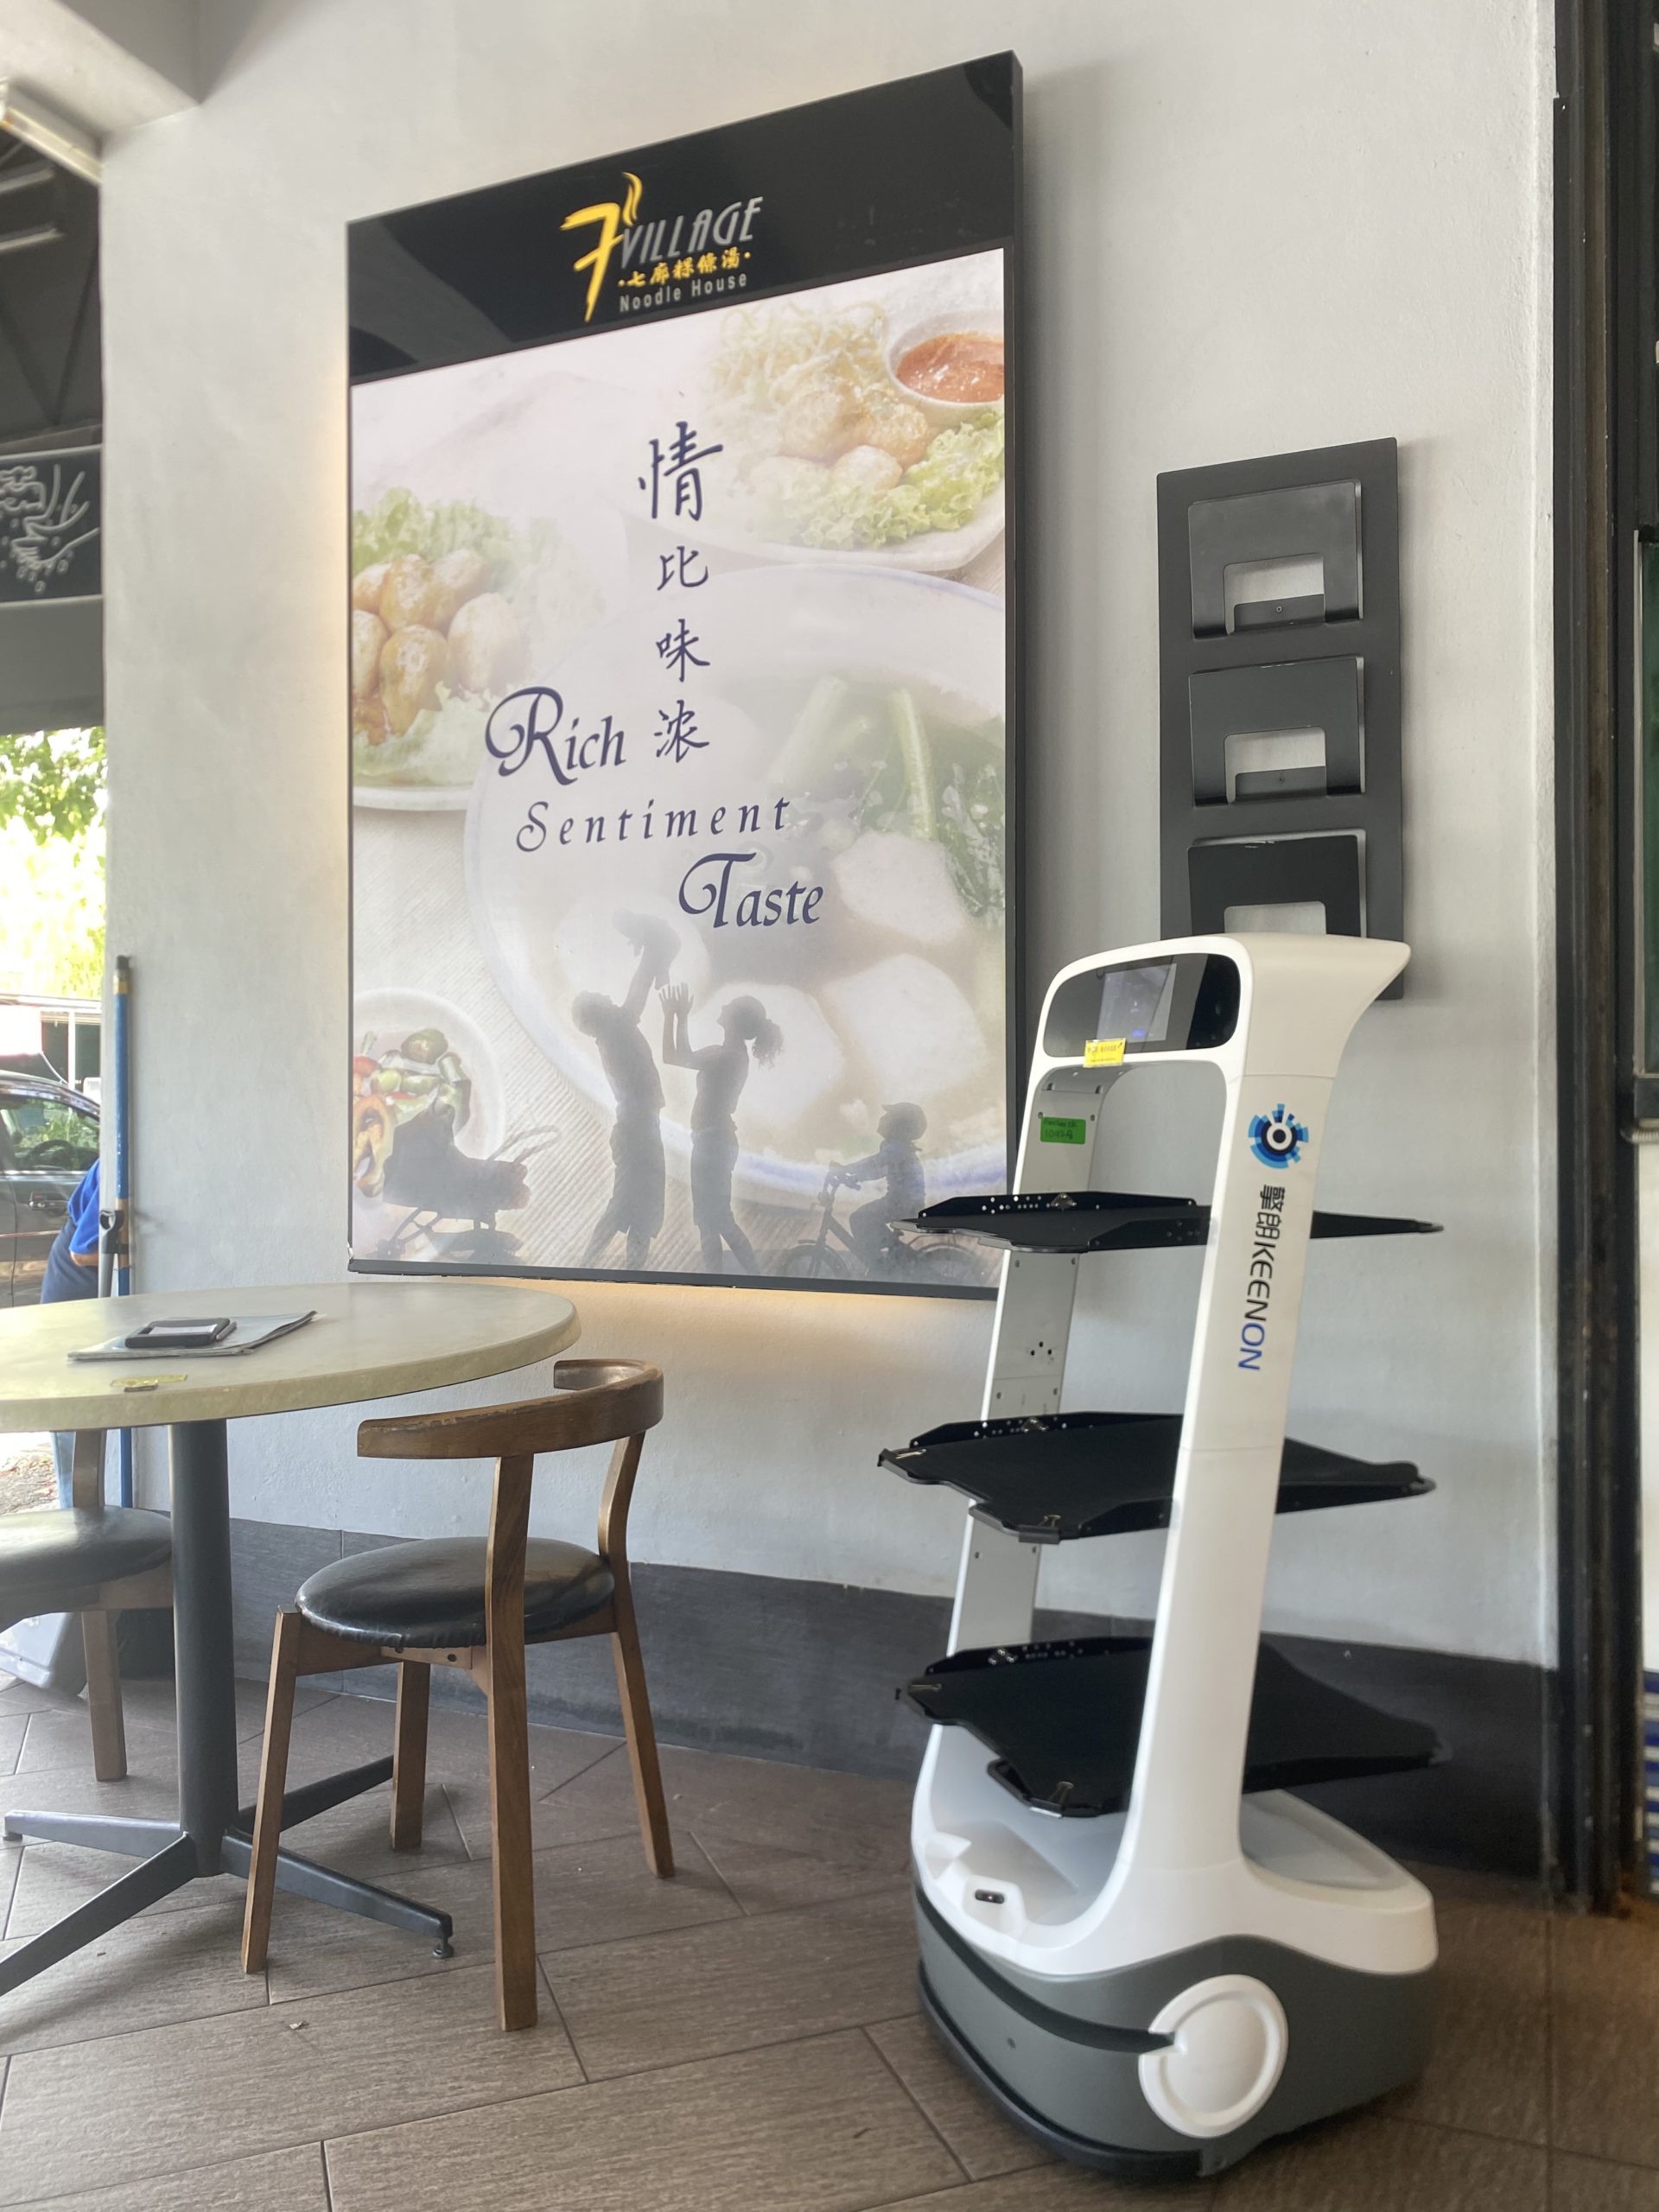 Solutions: Restaurant Robot